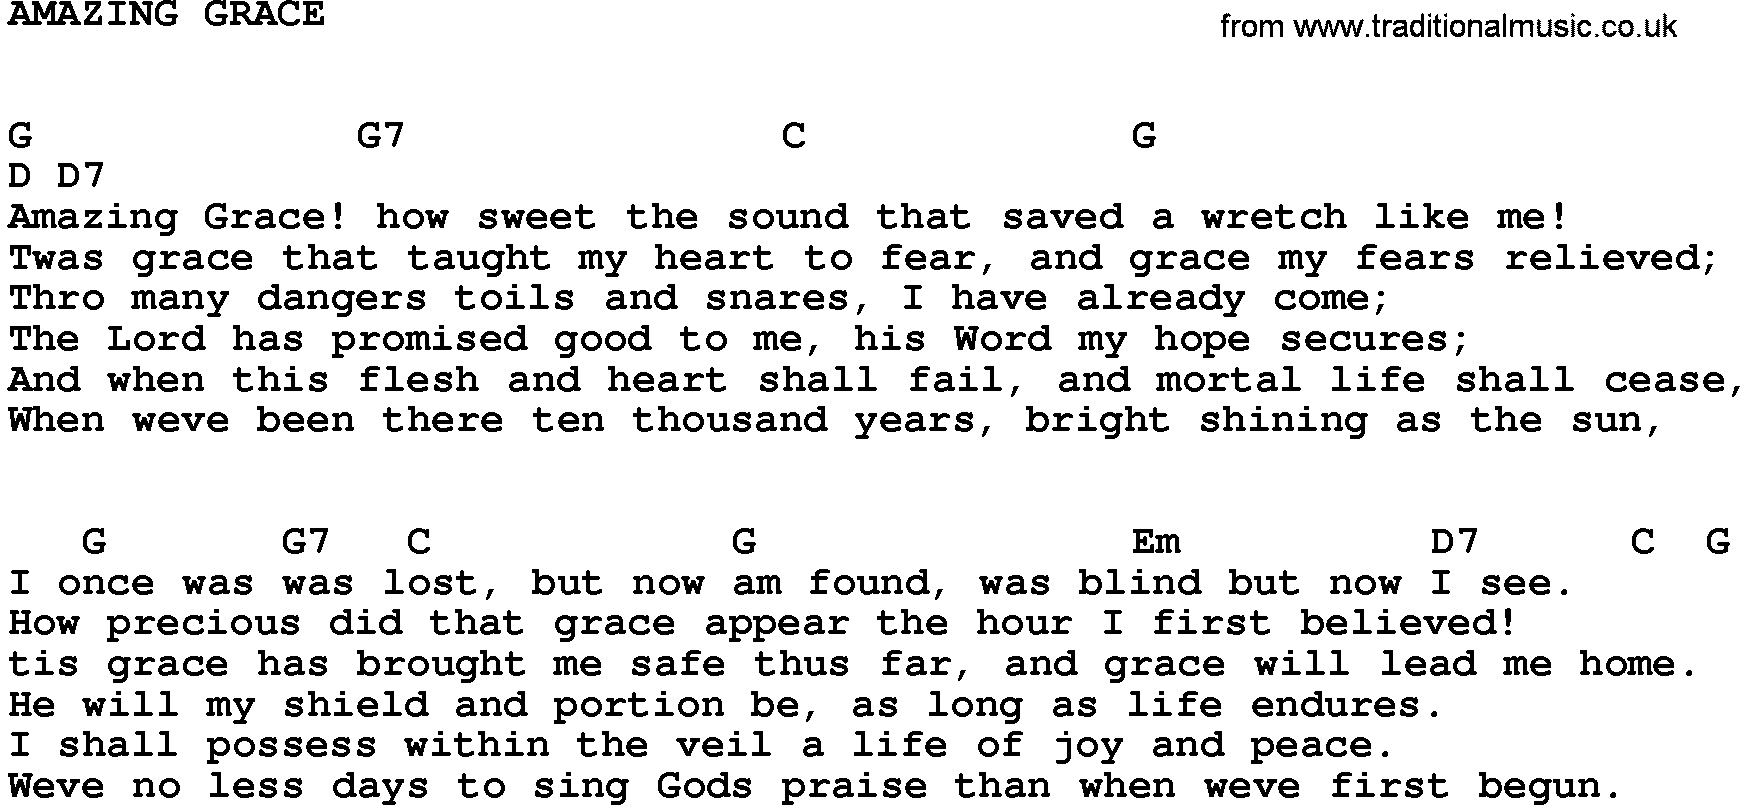 Gospel Song: Amazing Grace(G)-Trad, lyrics and chords.